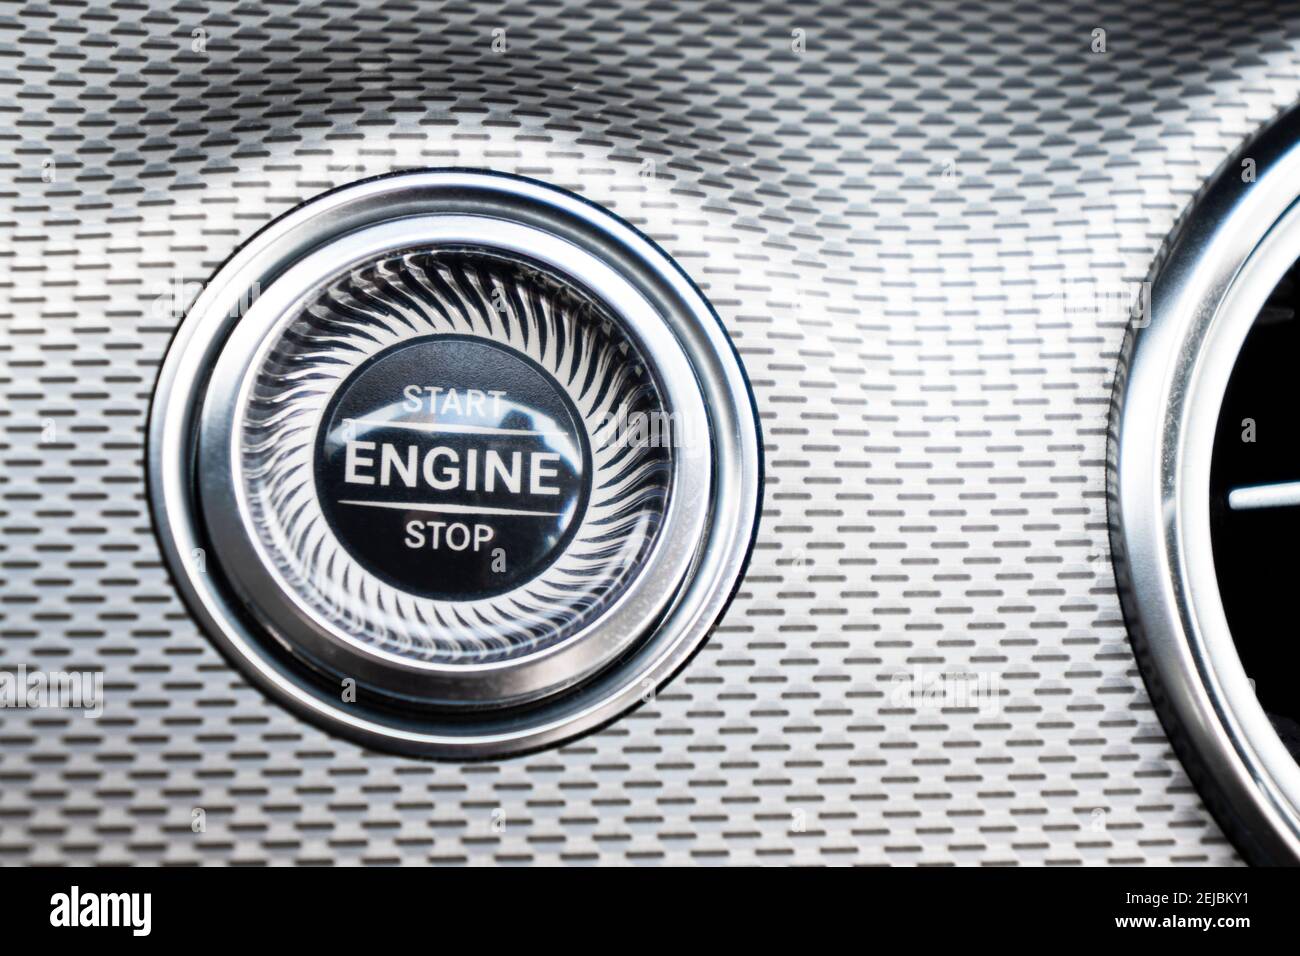 Engine start icon. Engine start website button on white background Stock  Photo - Alamy